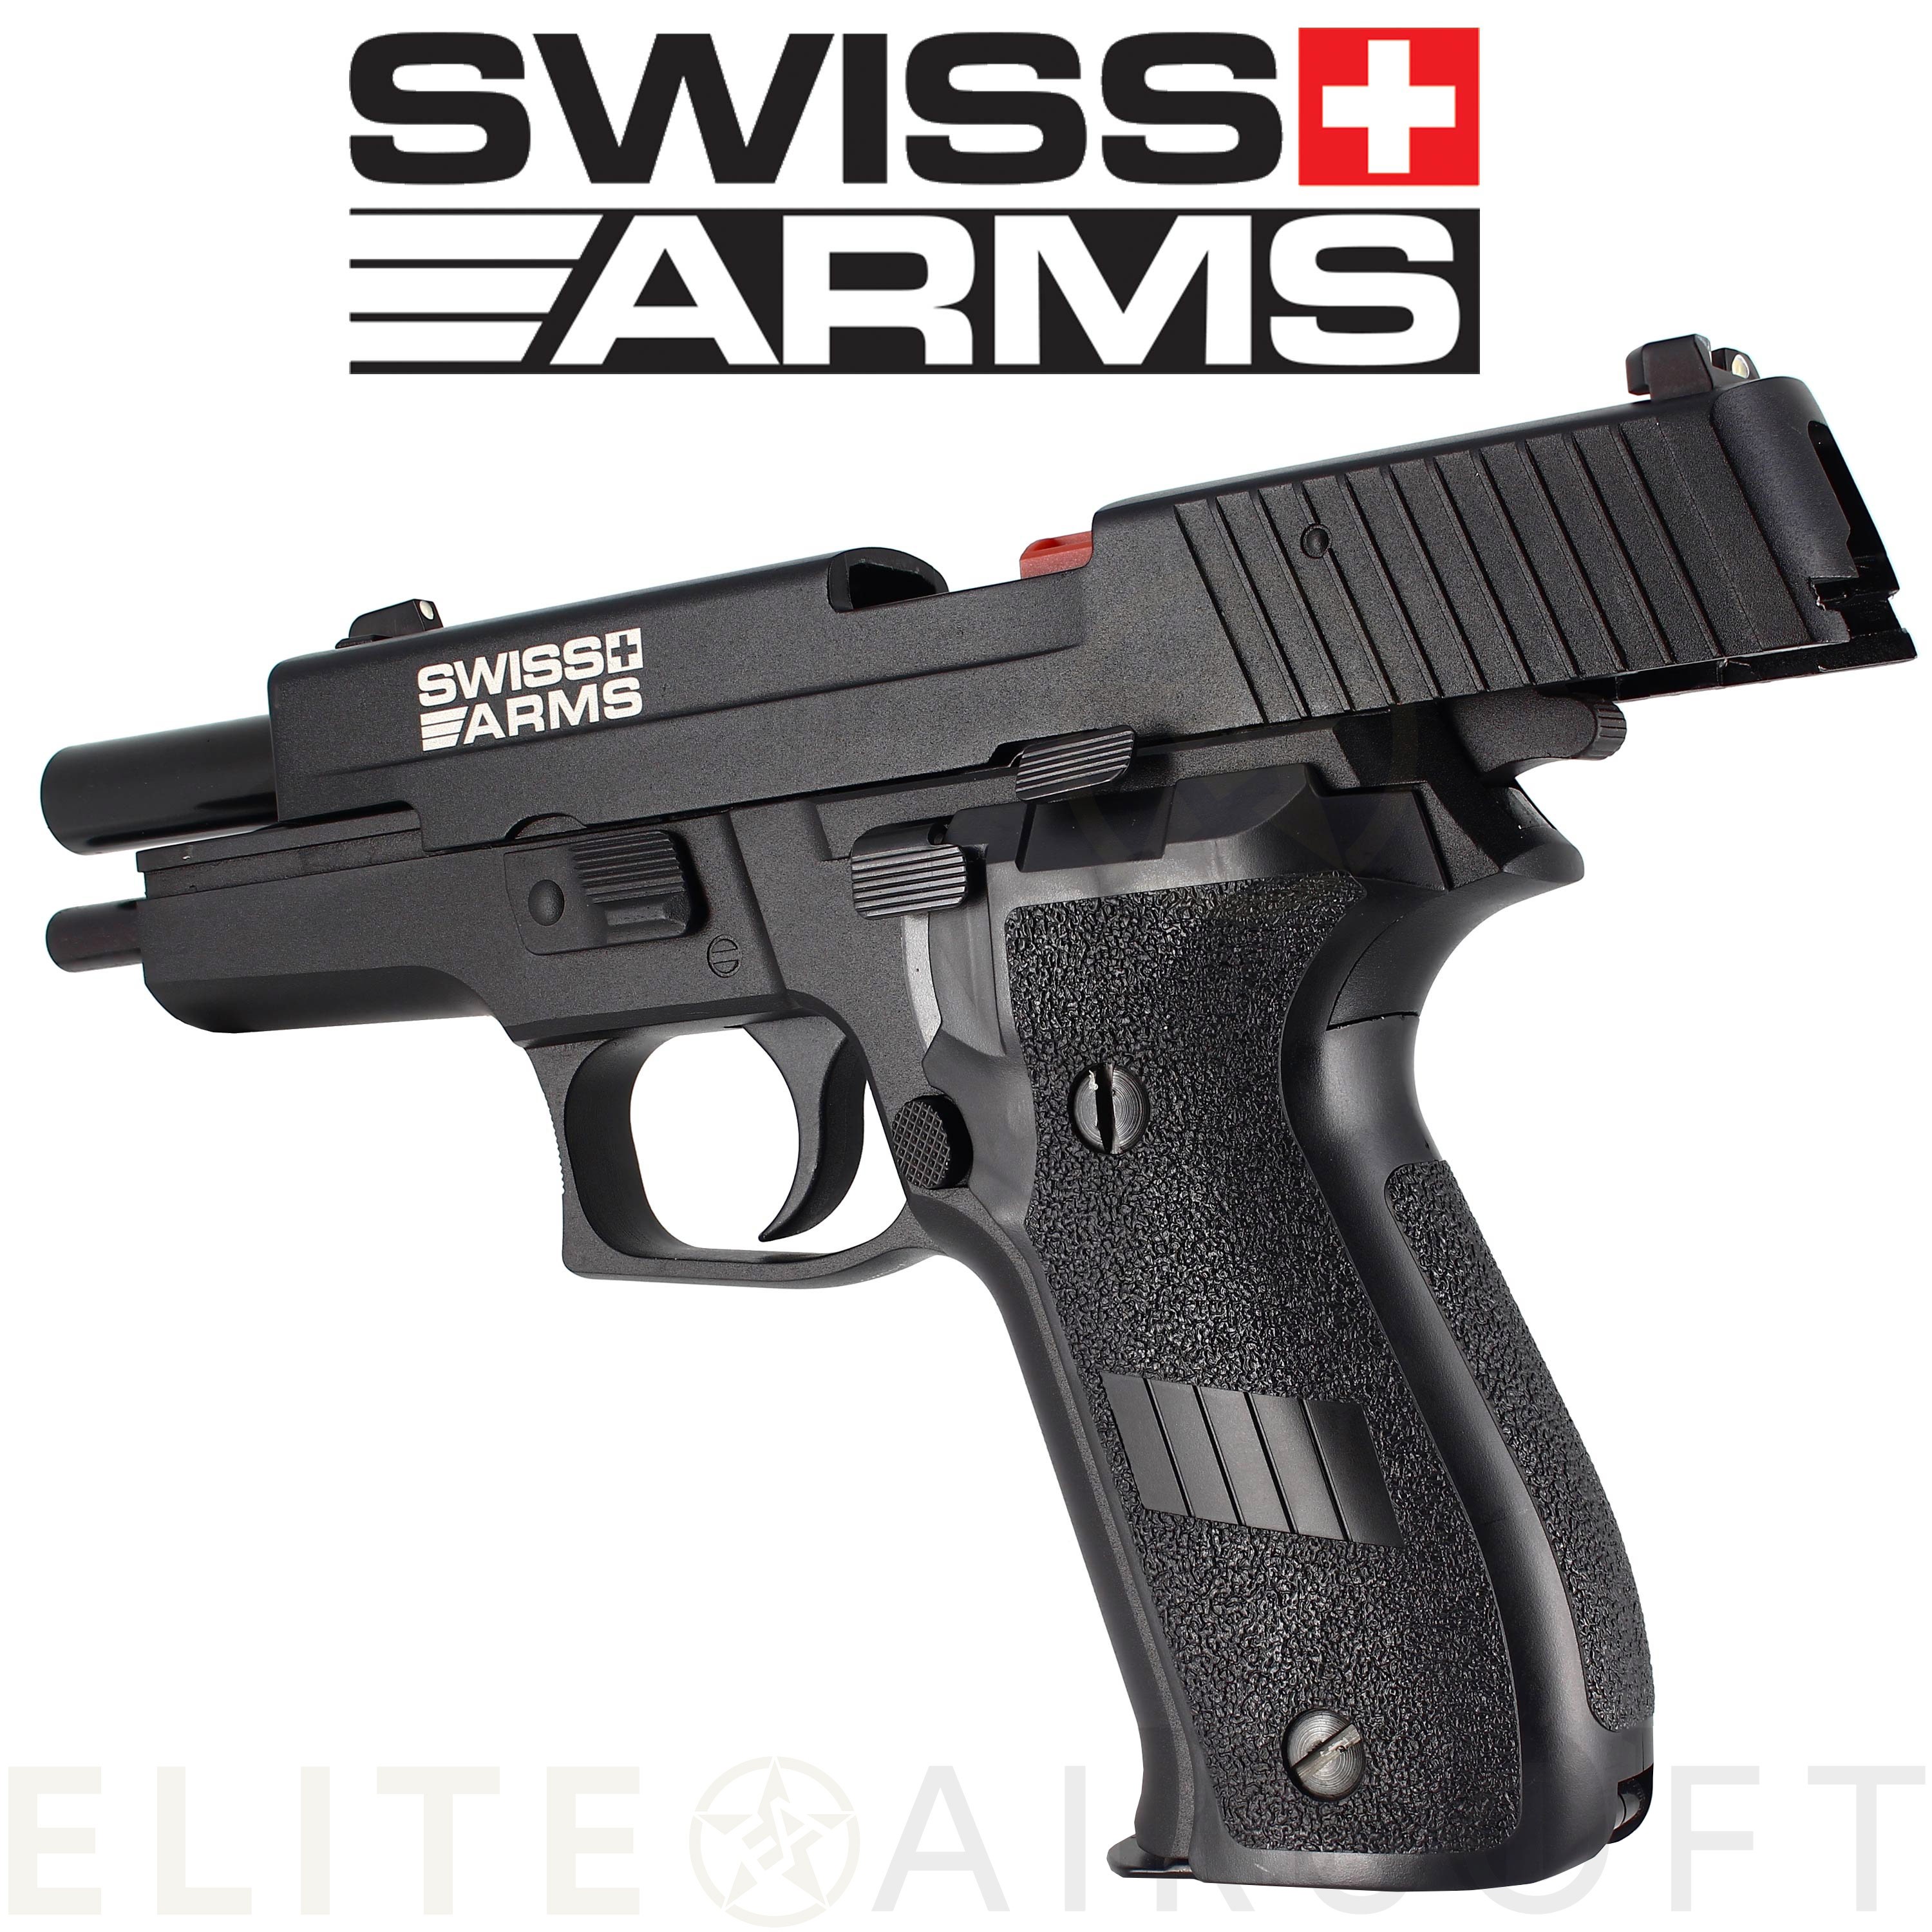 Réplique airsoft Swiss Arms Navy Pistol manuel 6mm